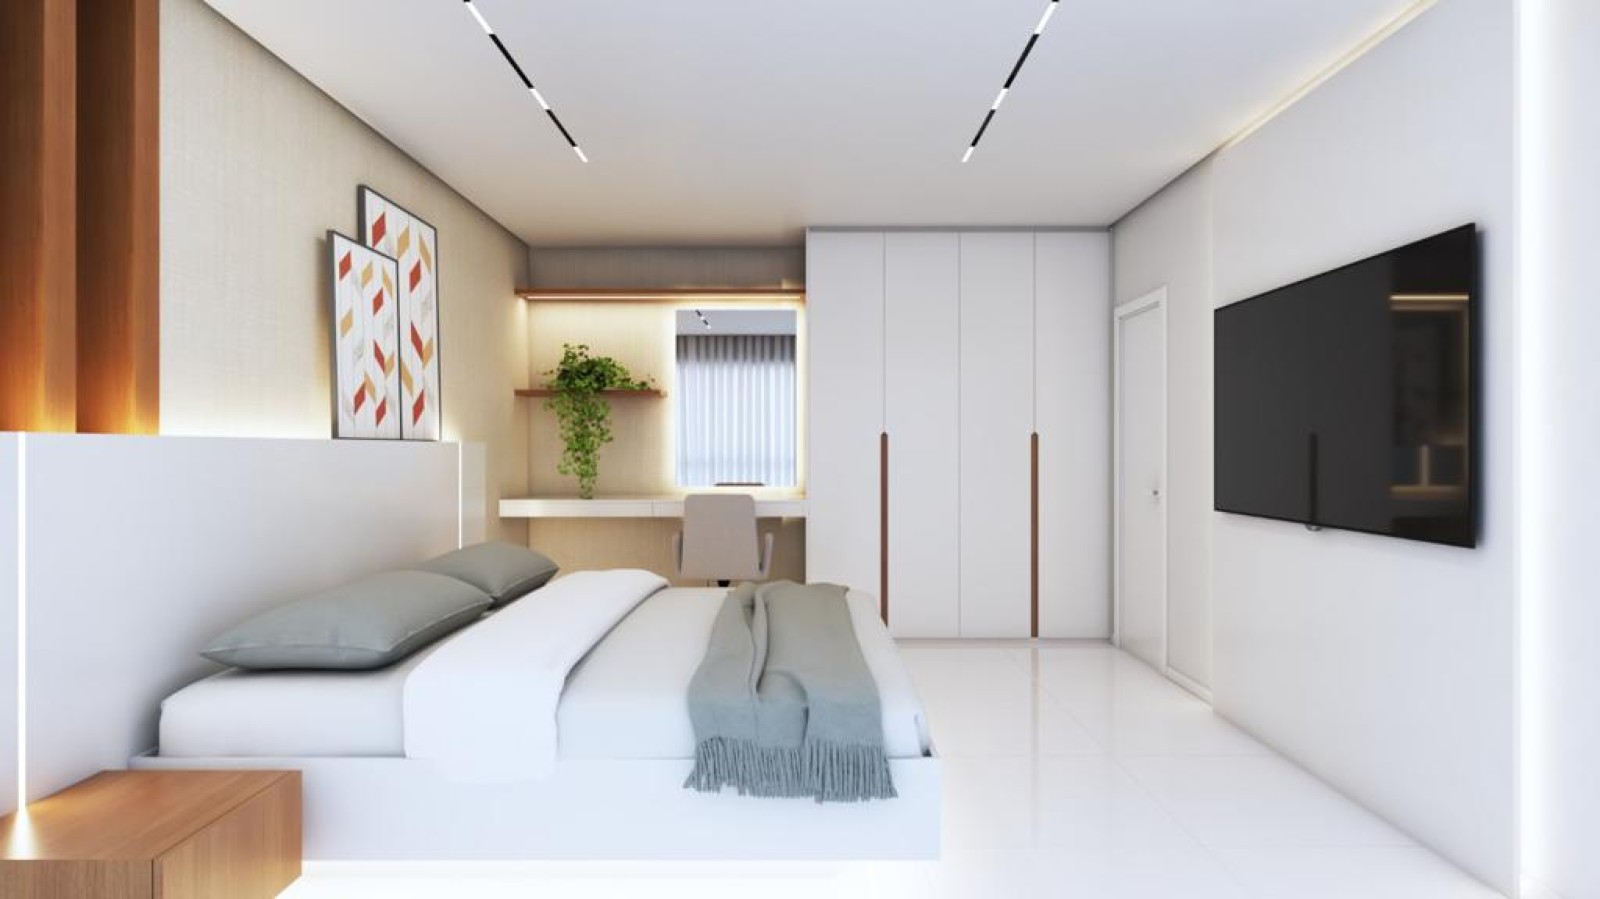 3 Bedroom Luxury House, for sale, in Portimão, Algarve_224383